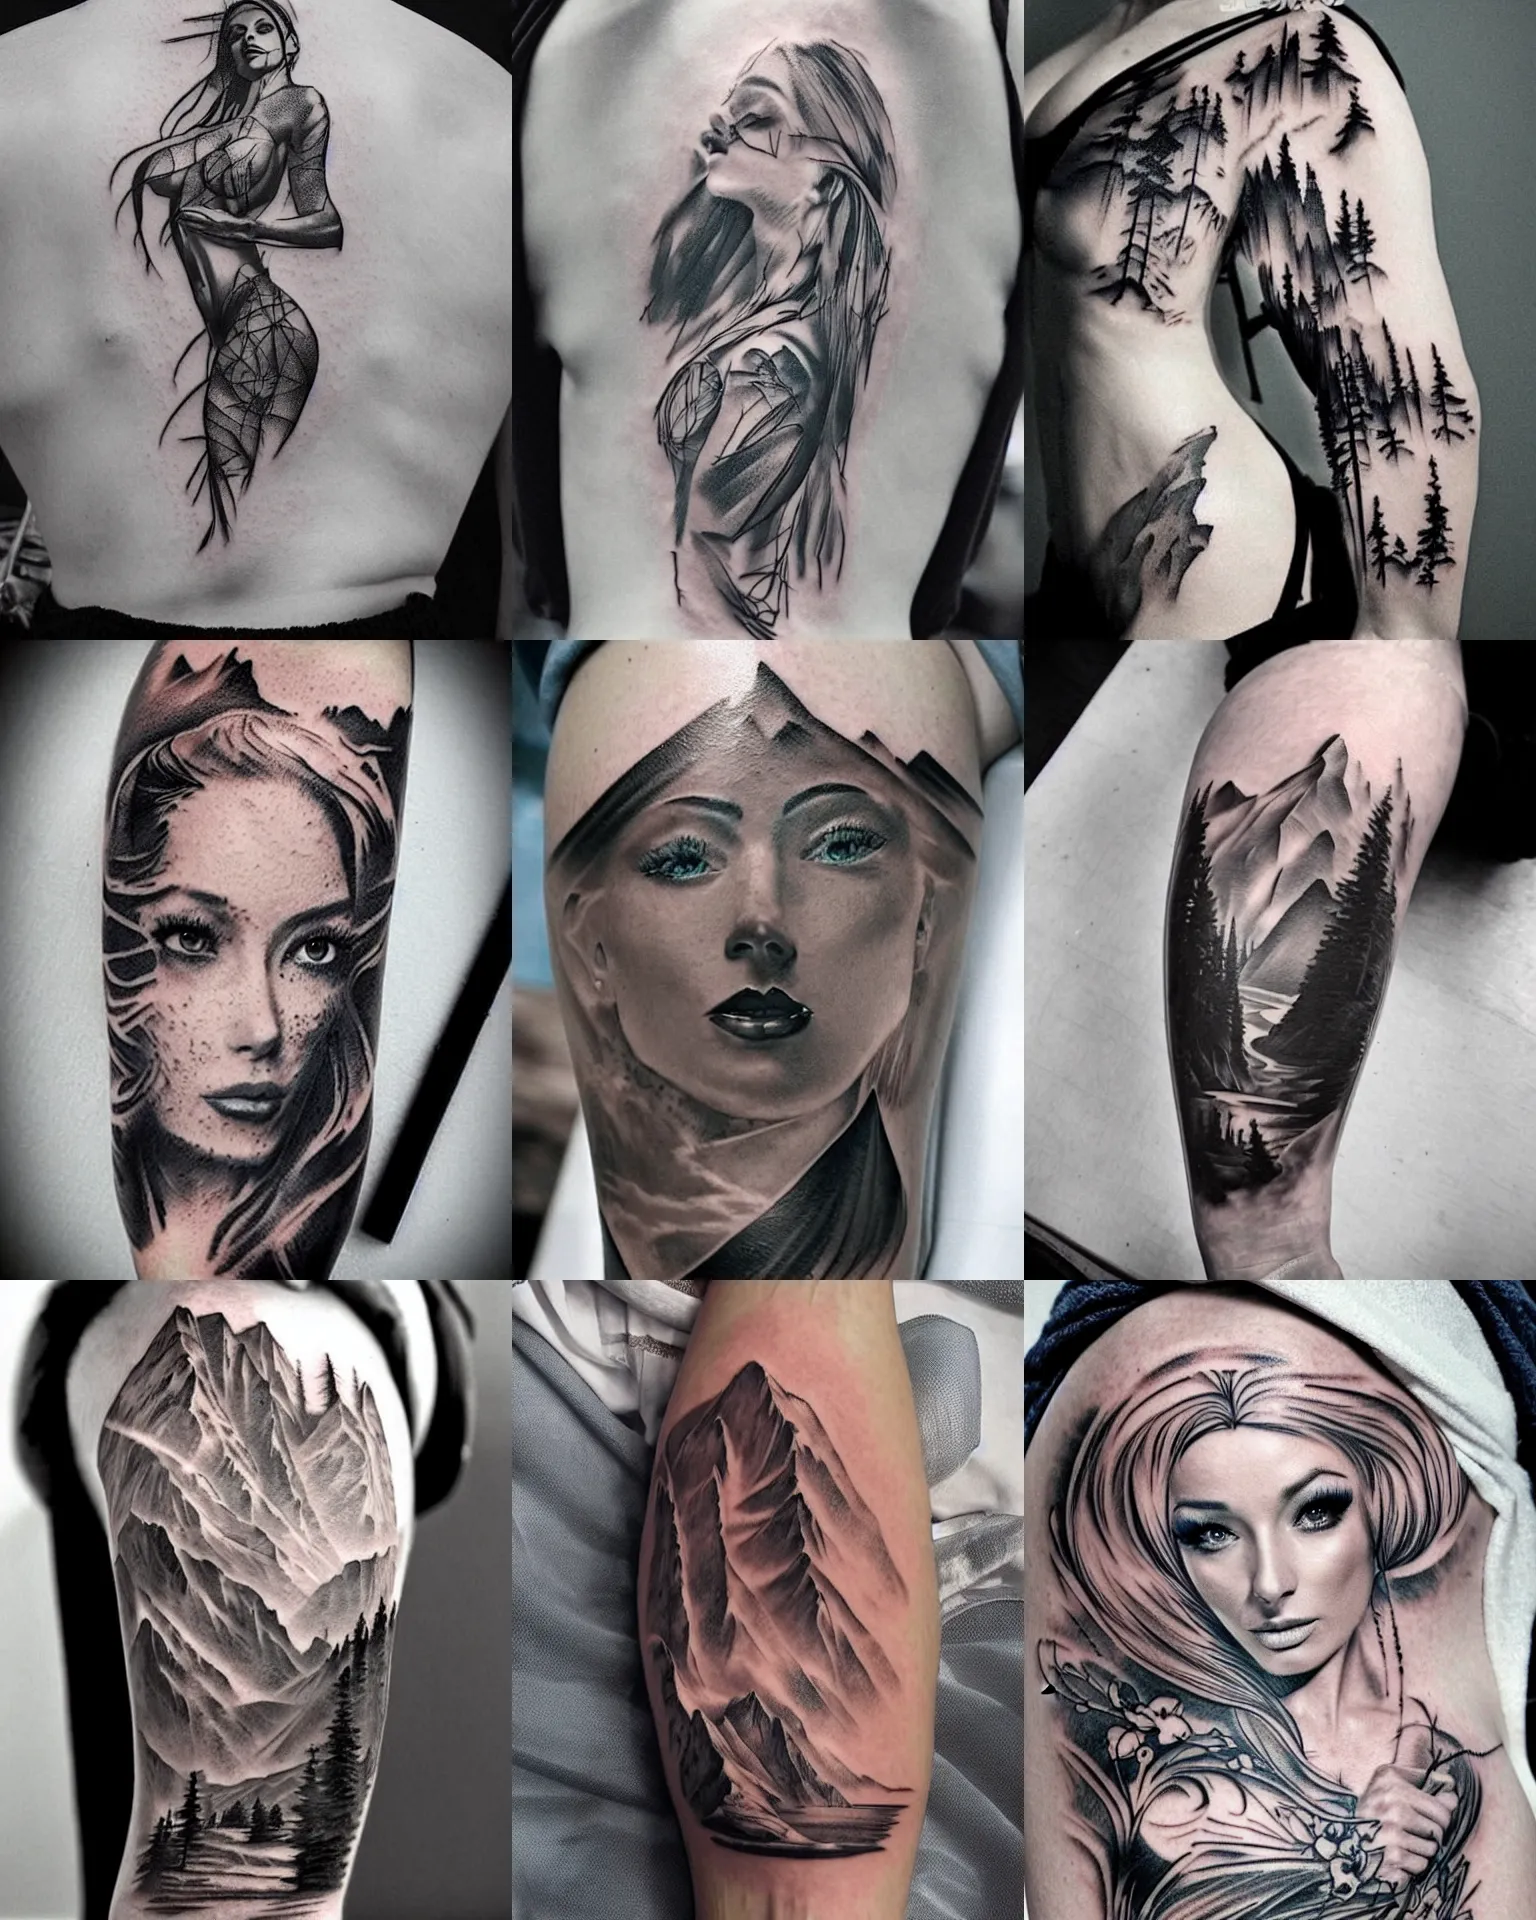 50 Outstanding Praying Hands Tattoos On Shoulder  Tattoo Designs   TattoosBagcom